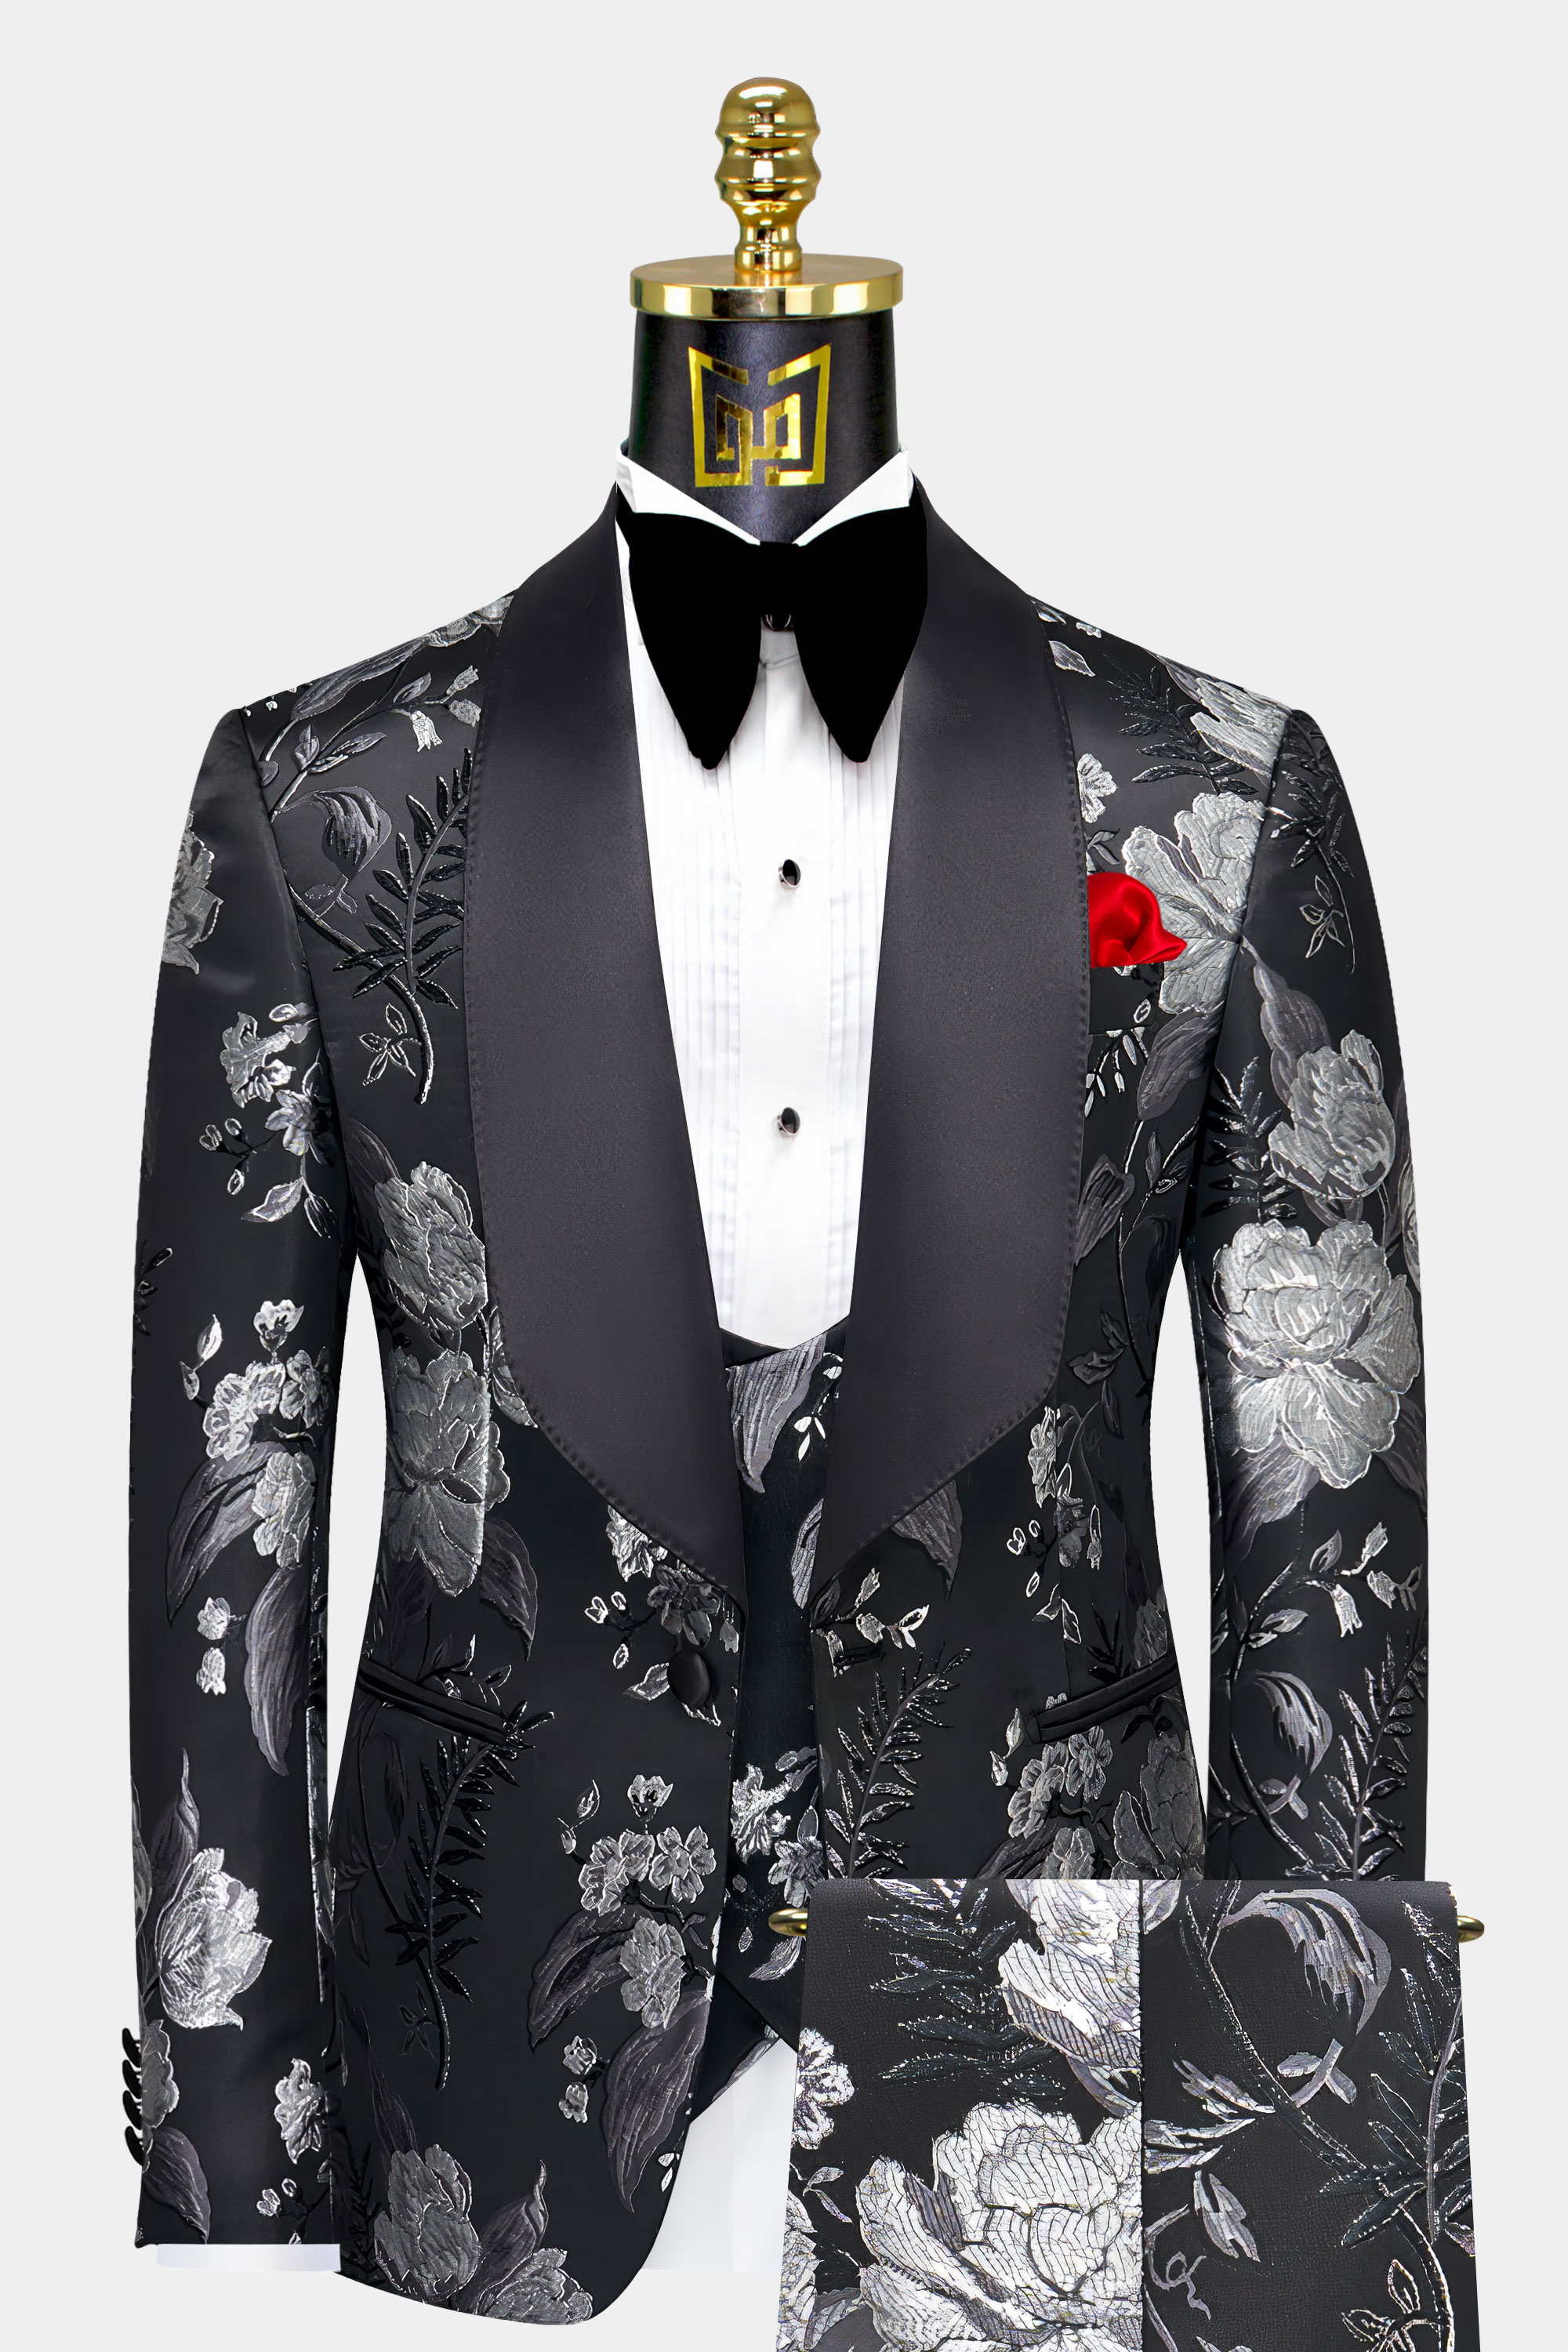 Mens-Silver-and-Black-Tuxedo-Floral-Wedding-Groom-Suit-from-Gentlemansguru.com